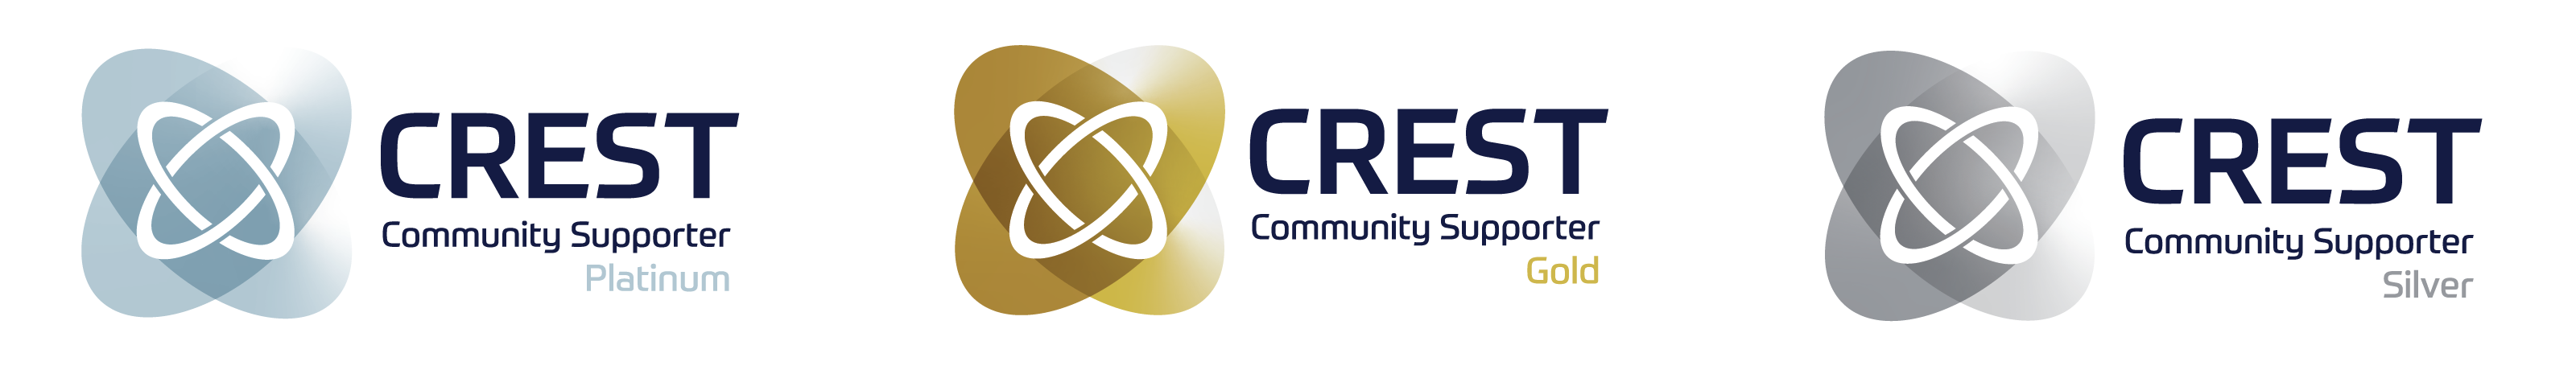 CREST Community Supporter logos